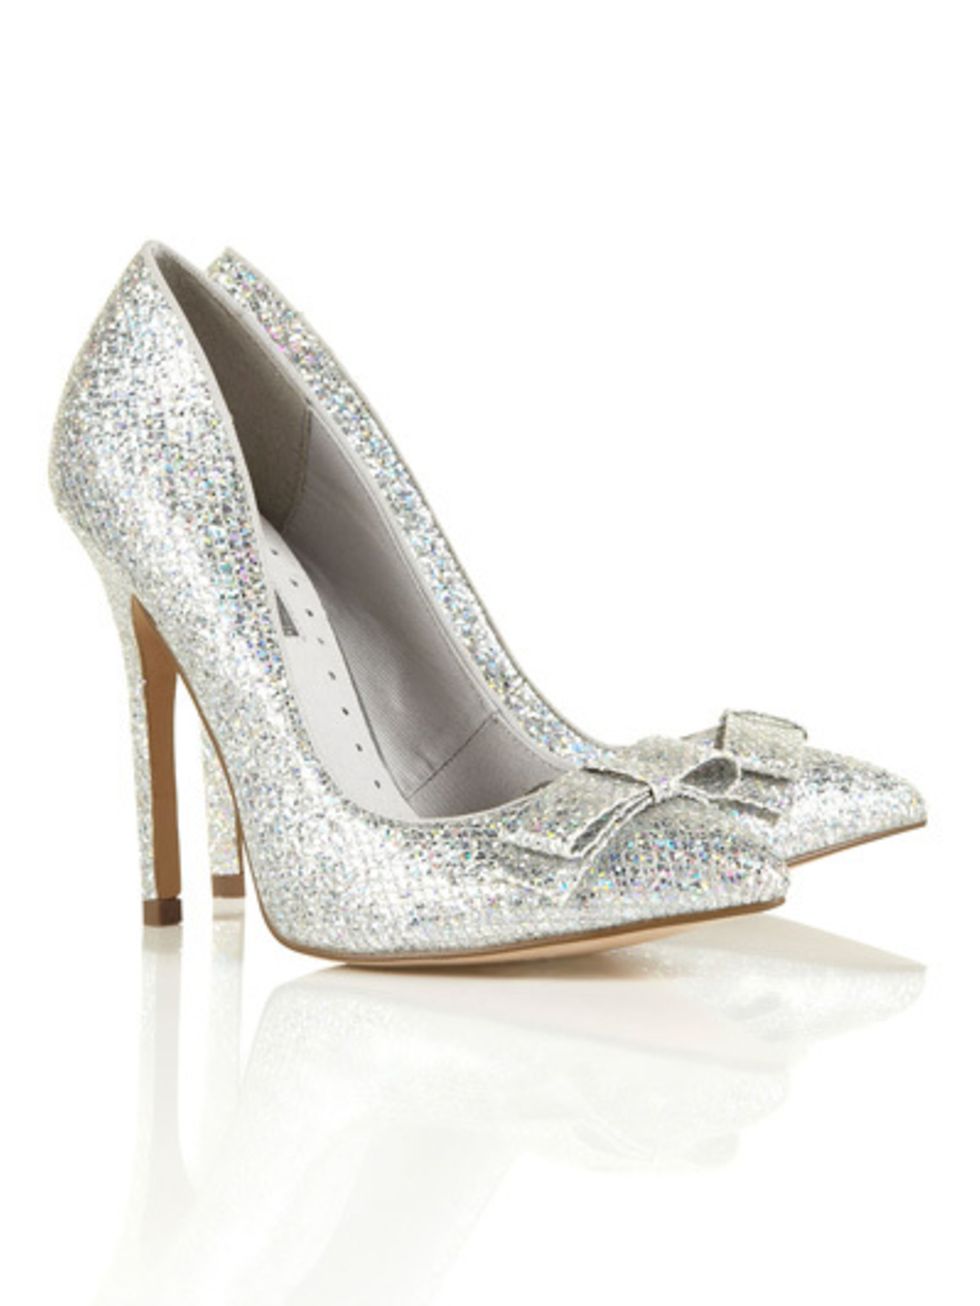 High heels, White, Sandal, Basic pump, Grey, Beige, Bridal shoe, Fashion design, Silver, Foot, 